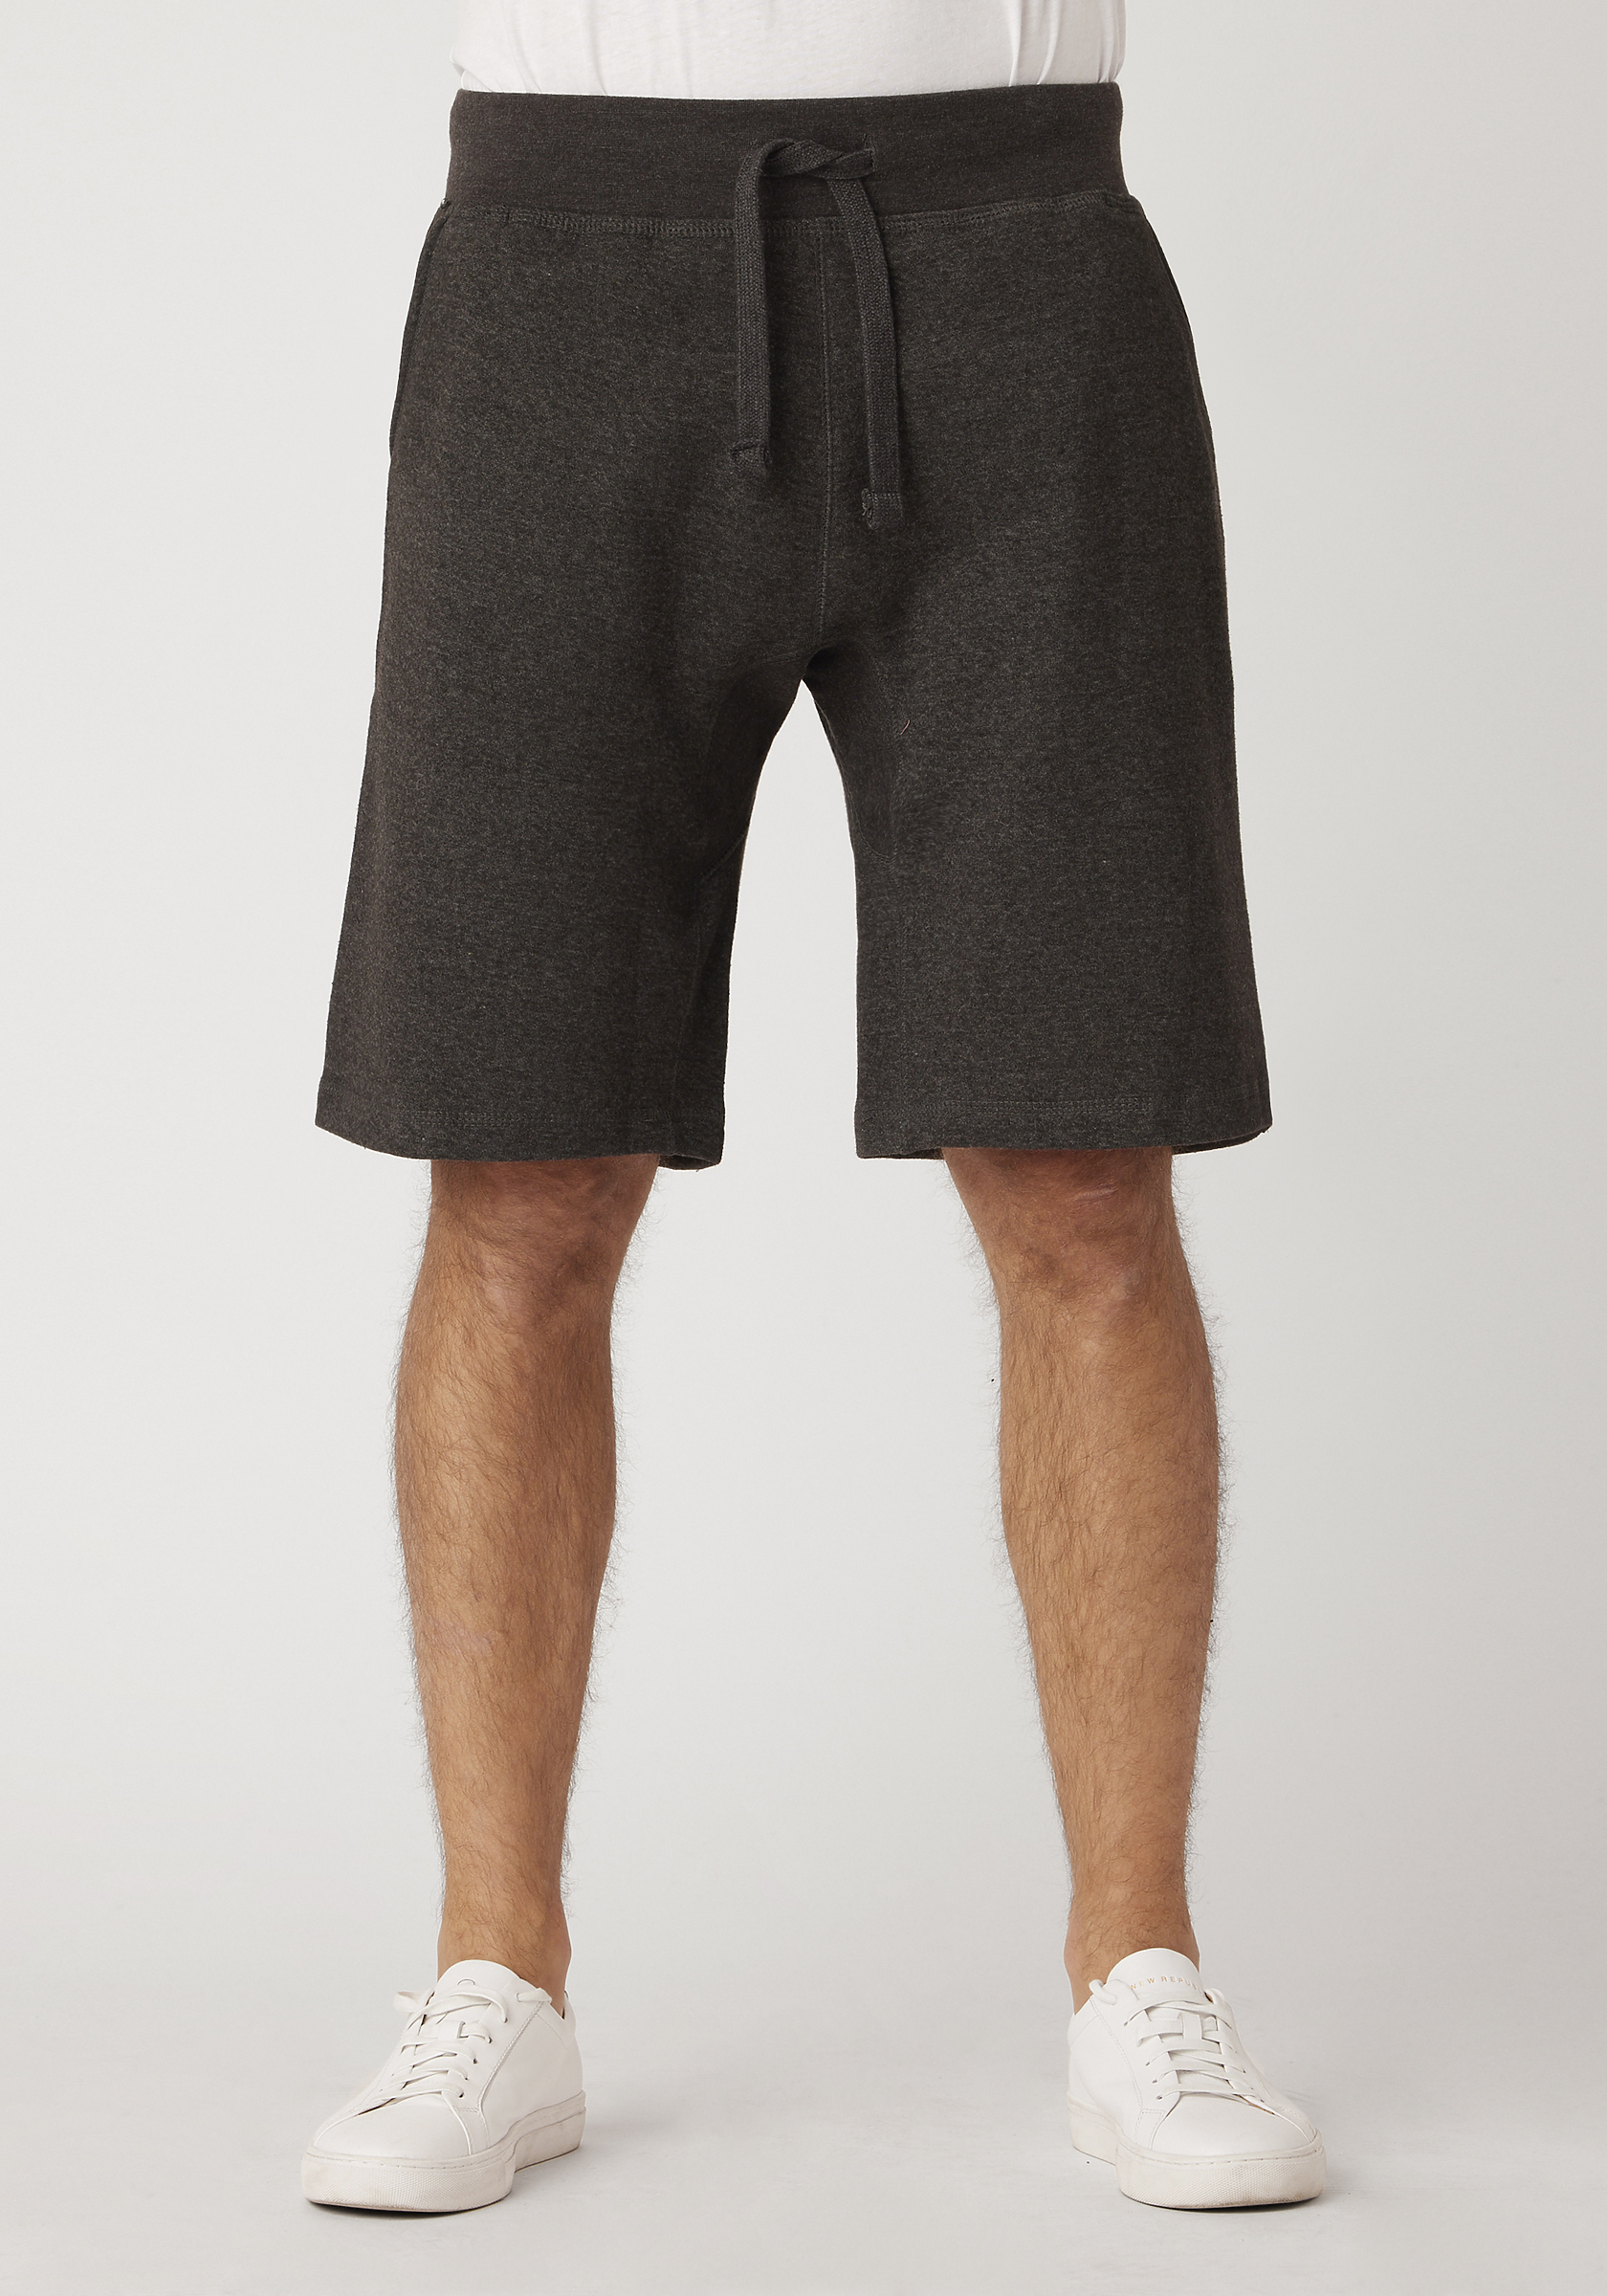 shop discounted Unisex Shorts 